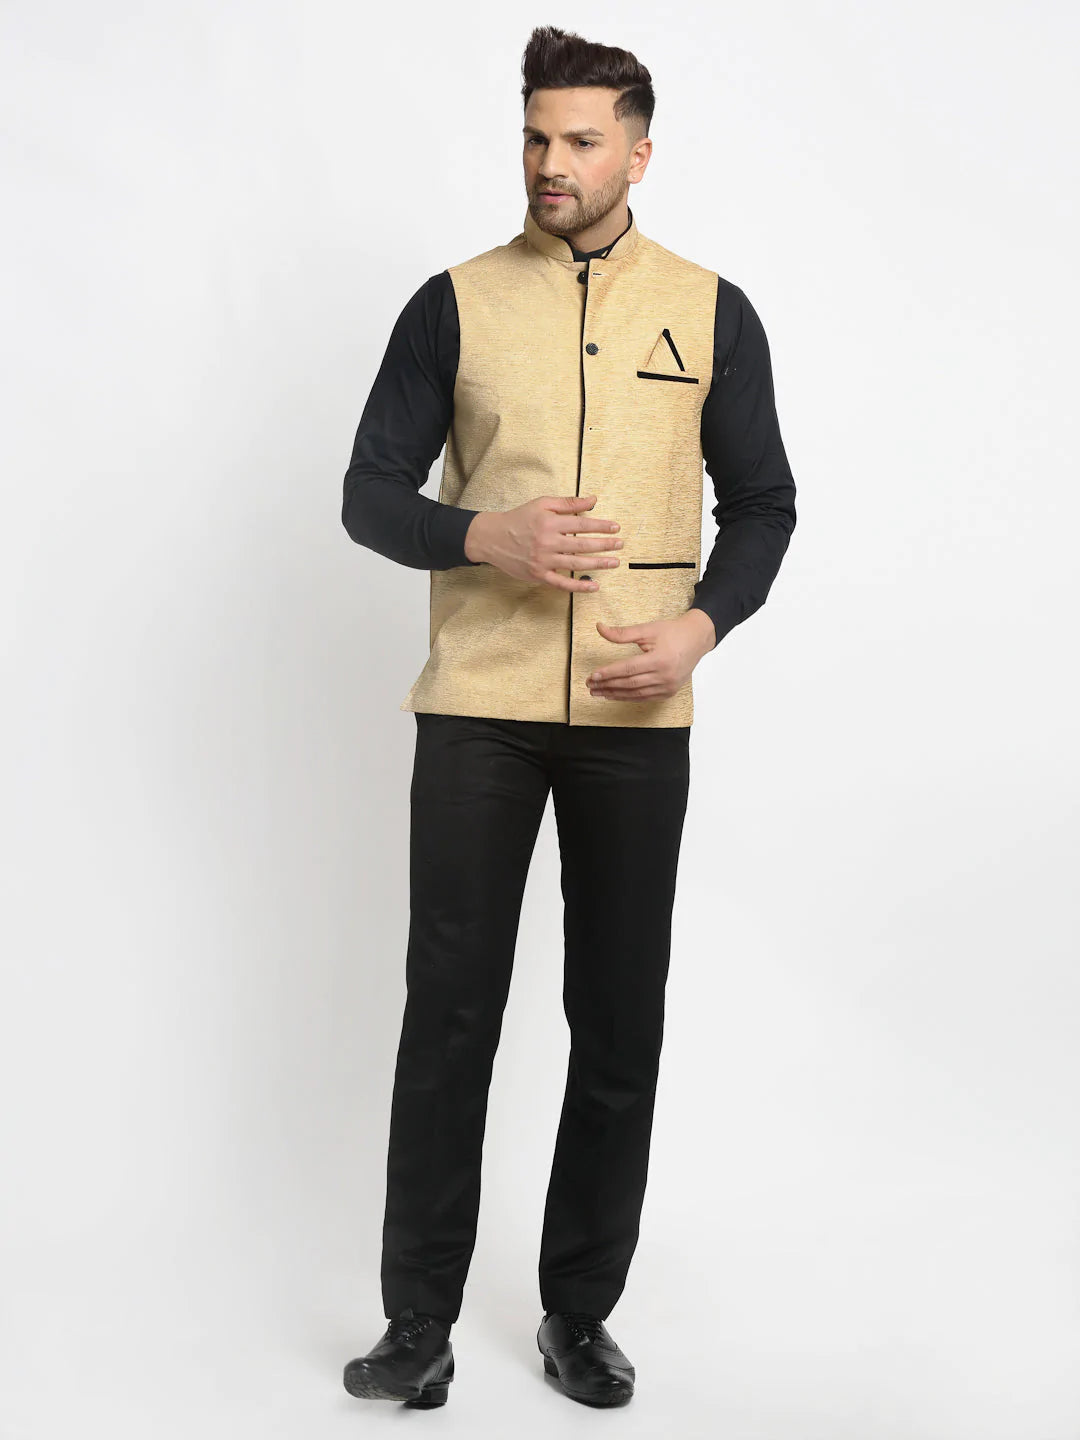 Jompers Men's Beige Solid Nehru Jacket with Square Pocket ( JOWC 4024Beige )